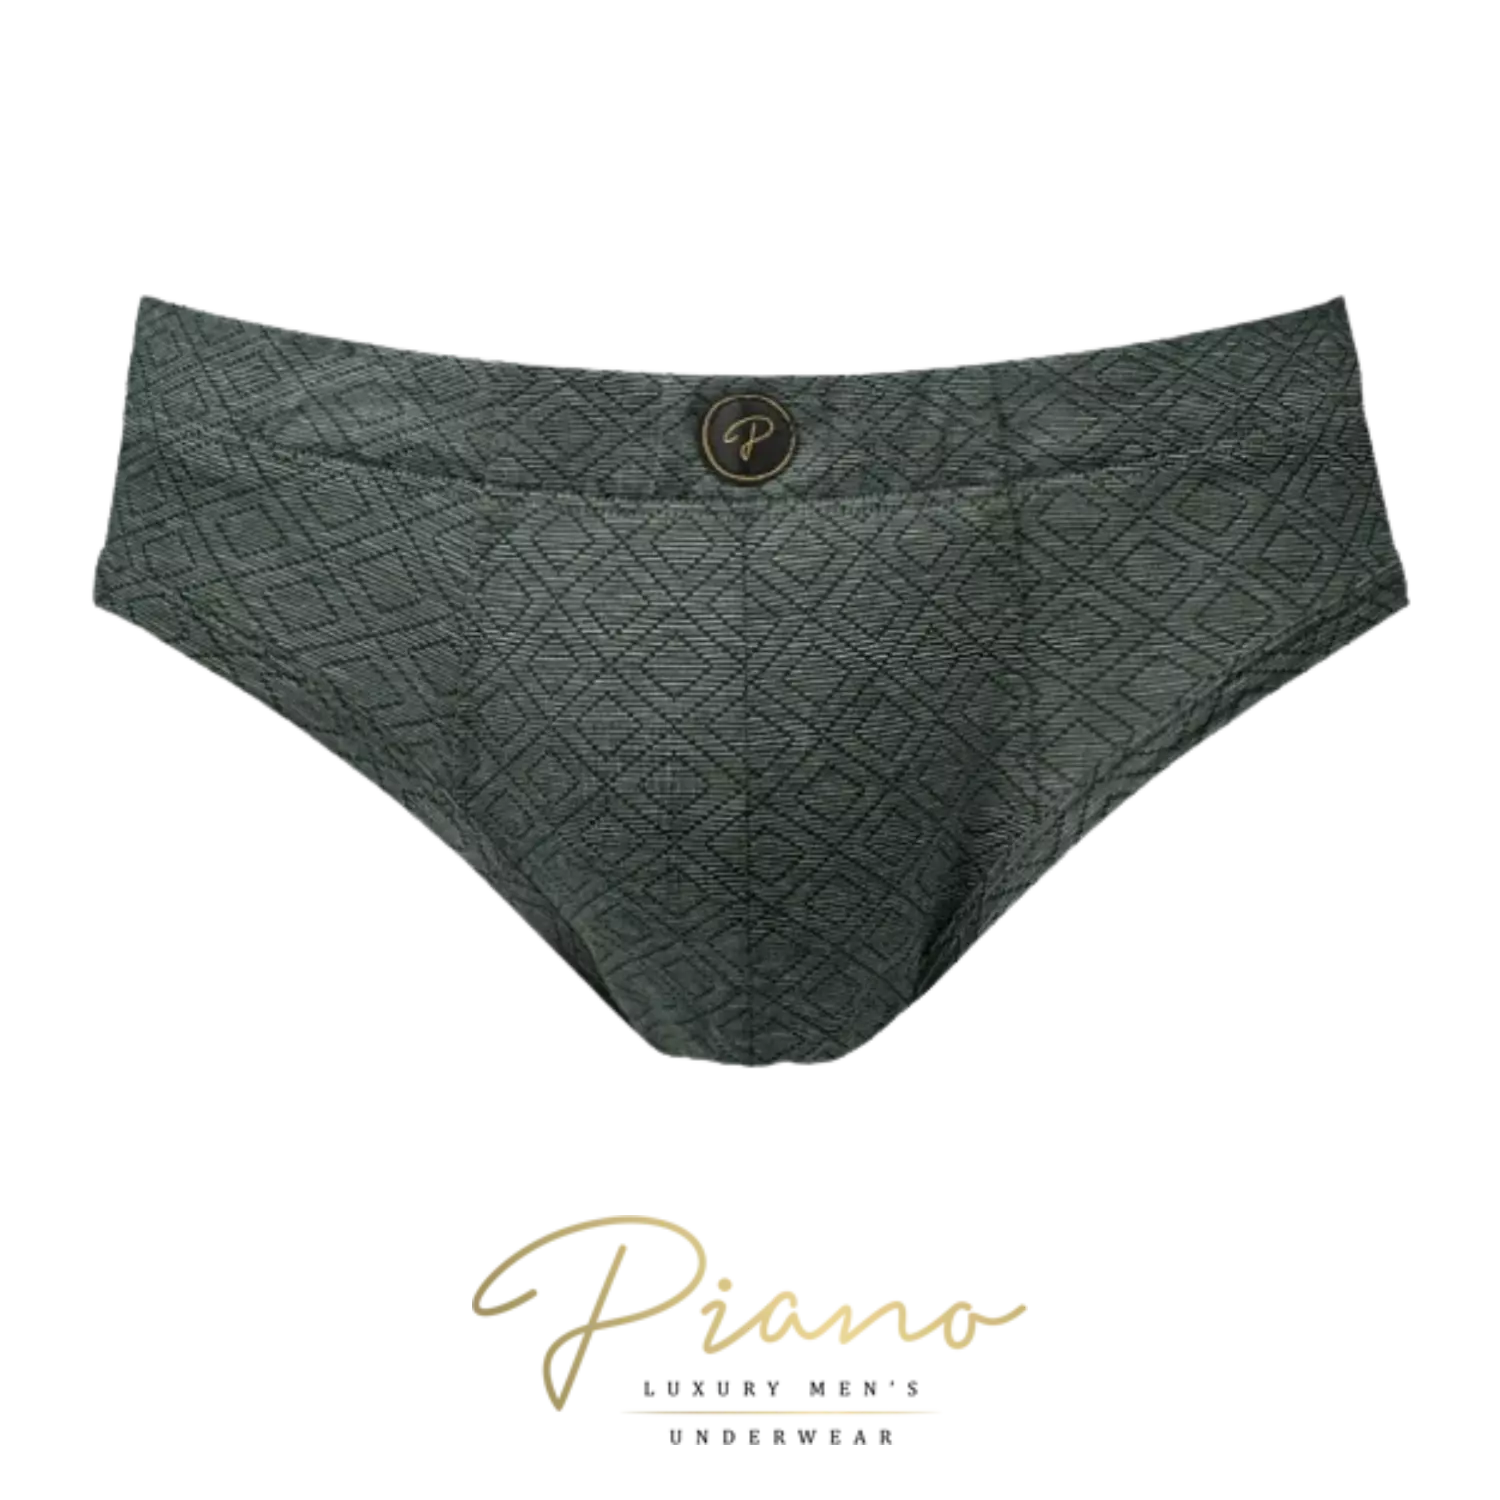 The President - slip  Piano Luxury Mens Underwear – Piano Group LLC